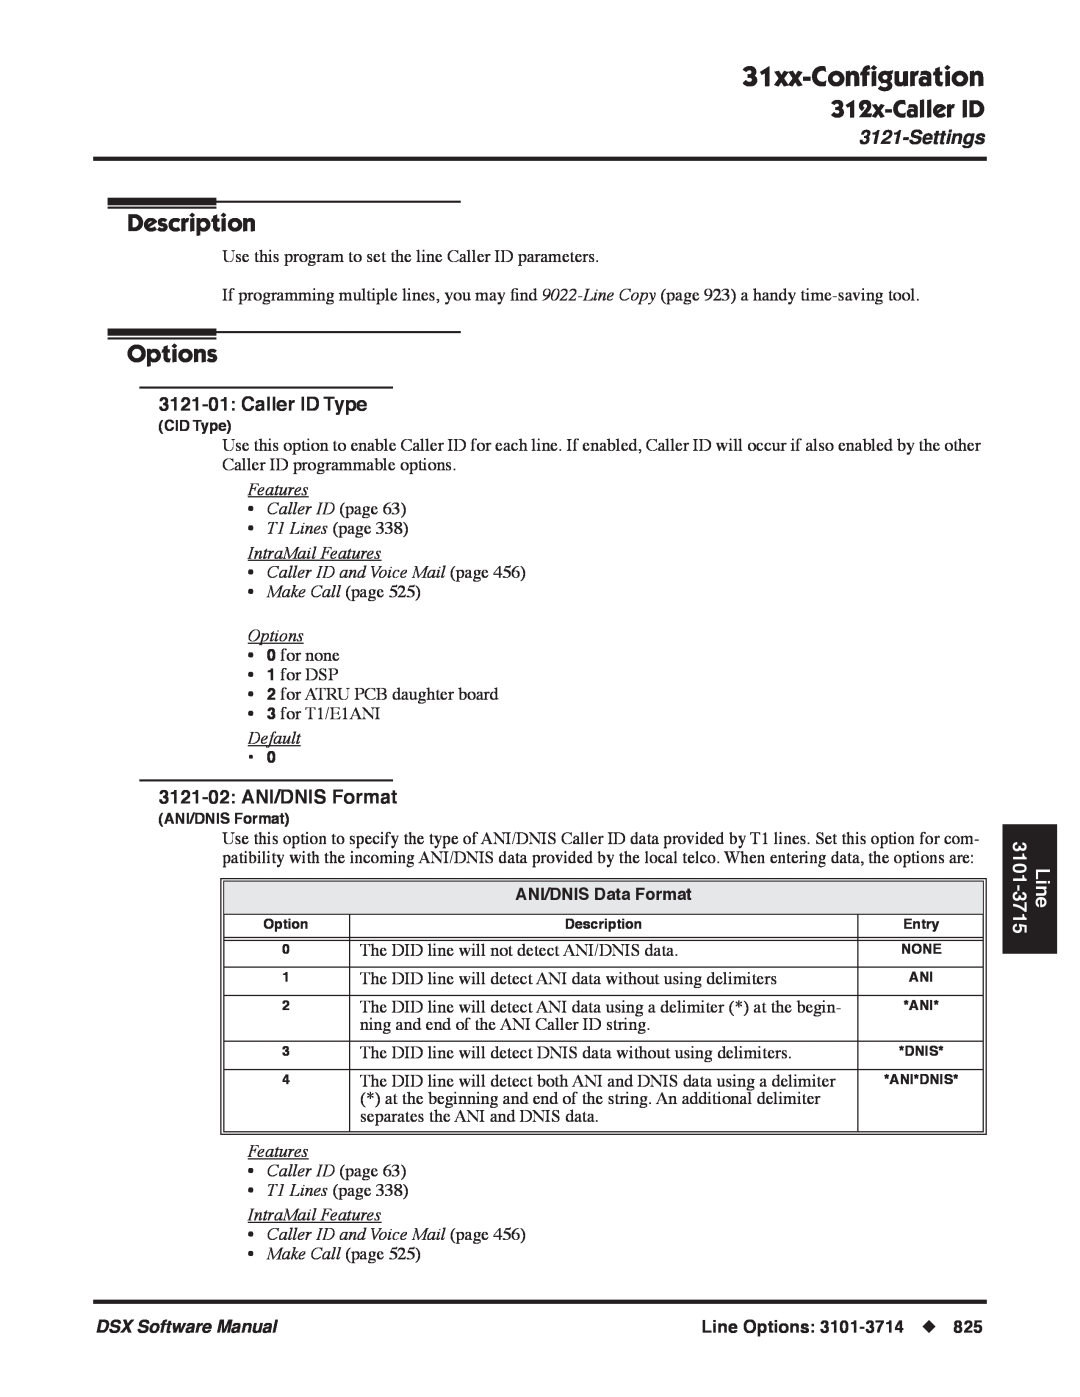 NEC P 312x-CallerID, 31xx-Conﬁguration, Description, Options, Settings, 3121-01:Caller ID Type, 3121-02:ANI/DNIS Format 